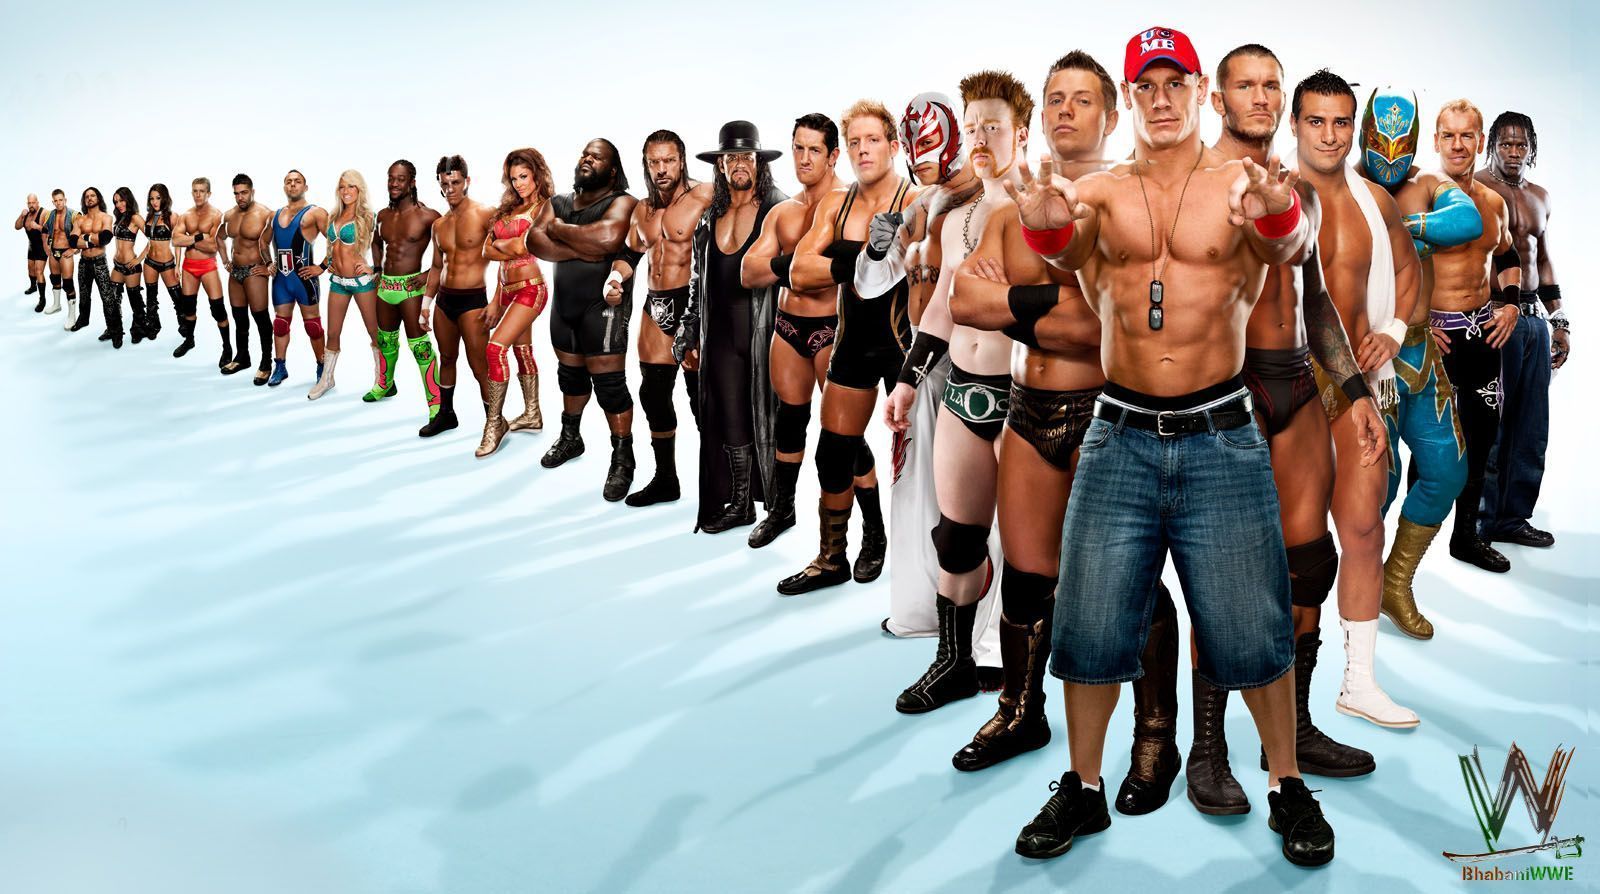 WWE Superstars Wallpaper - WWE on Wrestling Media